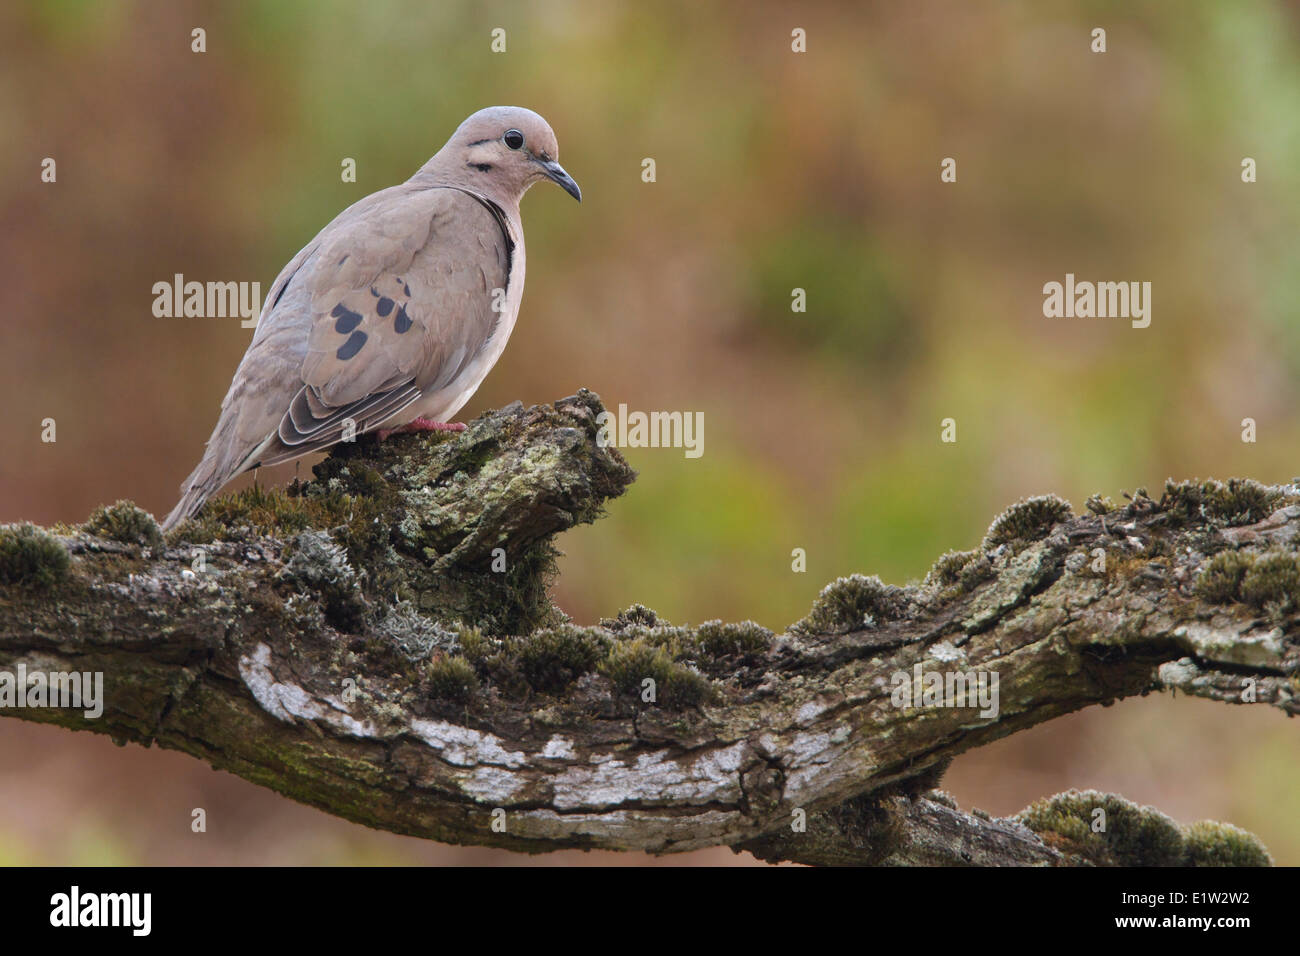 Eared Dove (Zenaida auriculata) perched on a branch in Peru. Stock Photo